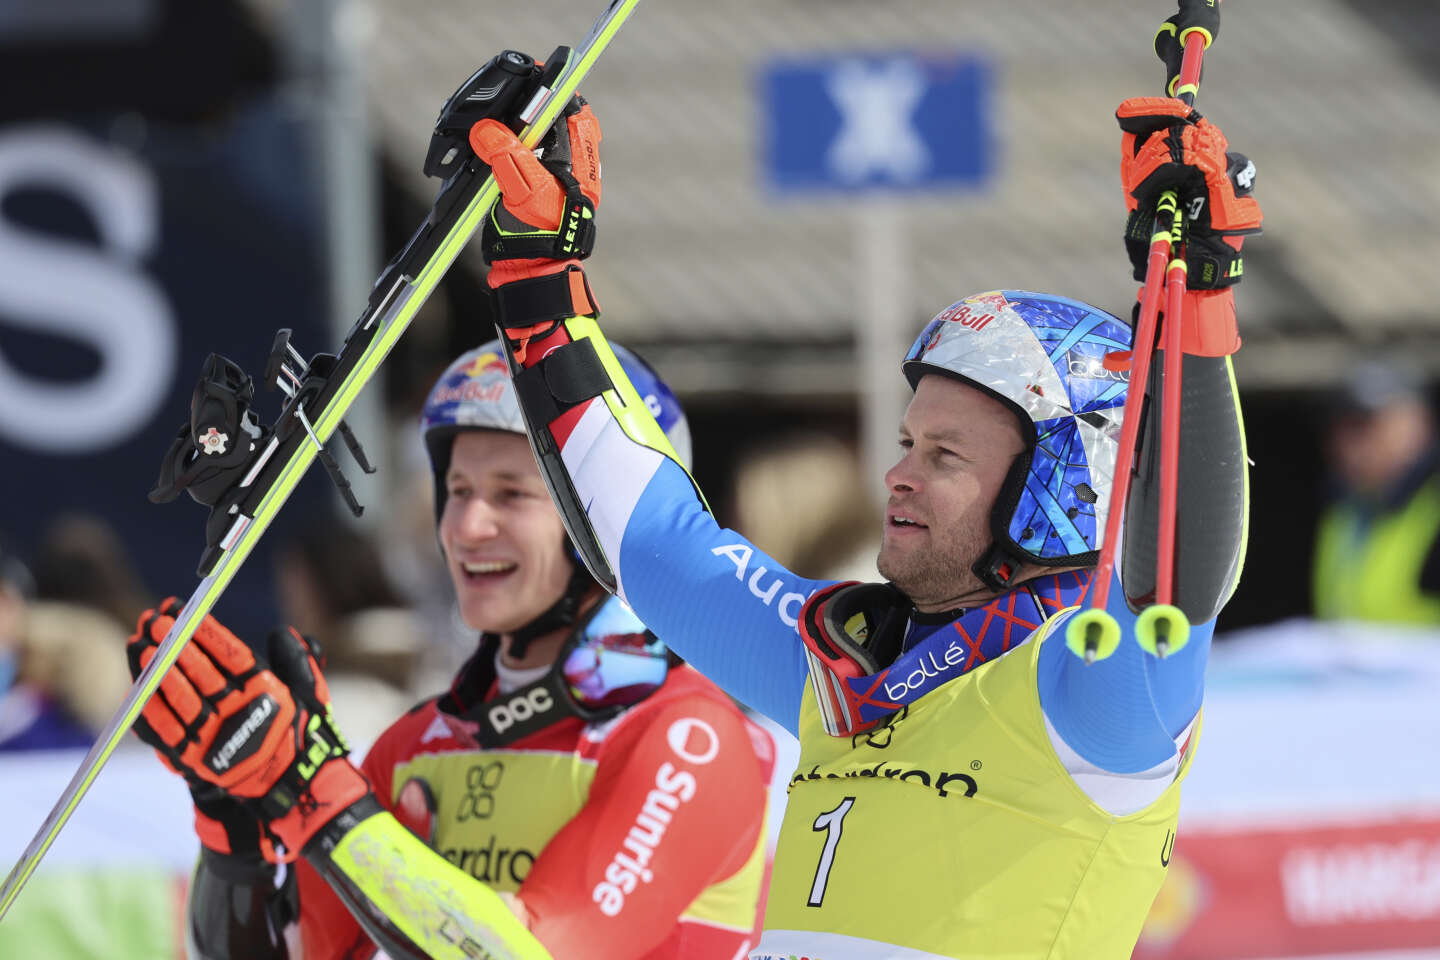 Alexis Pinturault takes another giant slalom podium